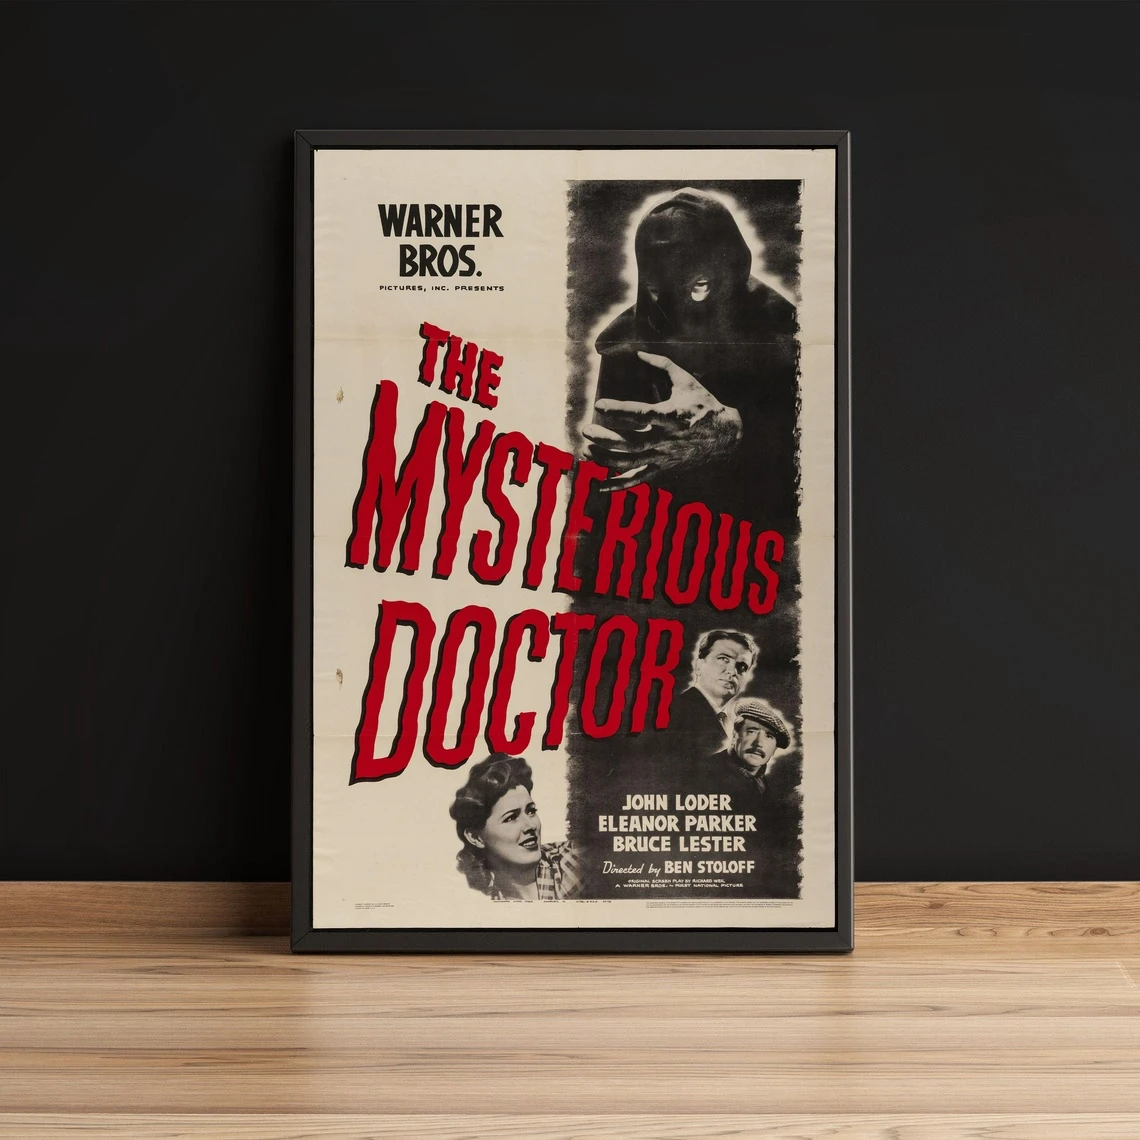 

The Mysterious Doctor Ghost Horror Retro Classic Alternative Art Deco Artwork Graphic Minimal Minimalist Movie Film Poster Print